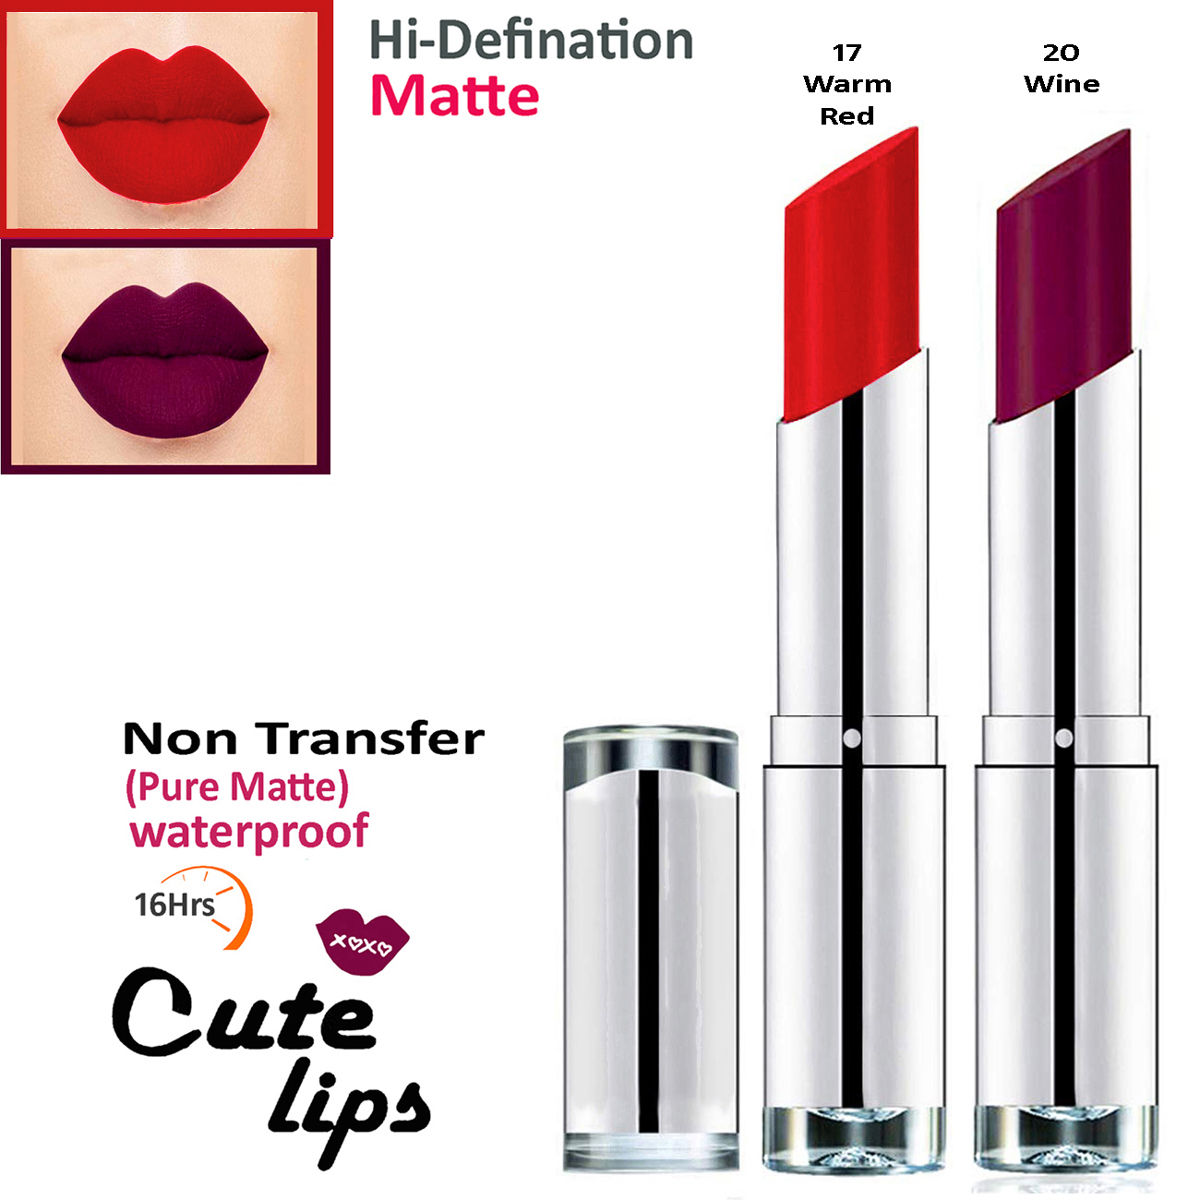 bq BLAQUE Cute Lips Non Transfer Matte Lipstick 2.4 gm each - 17 ...